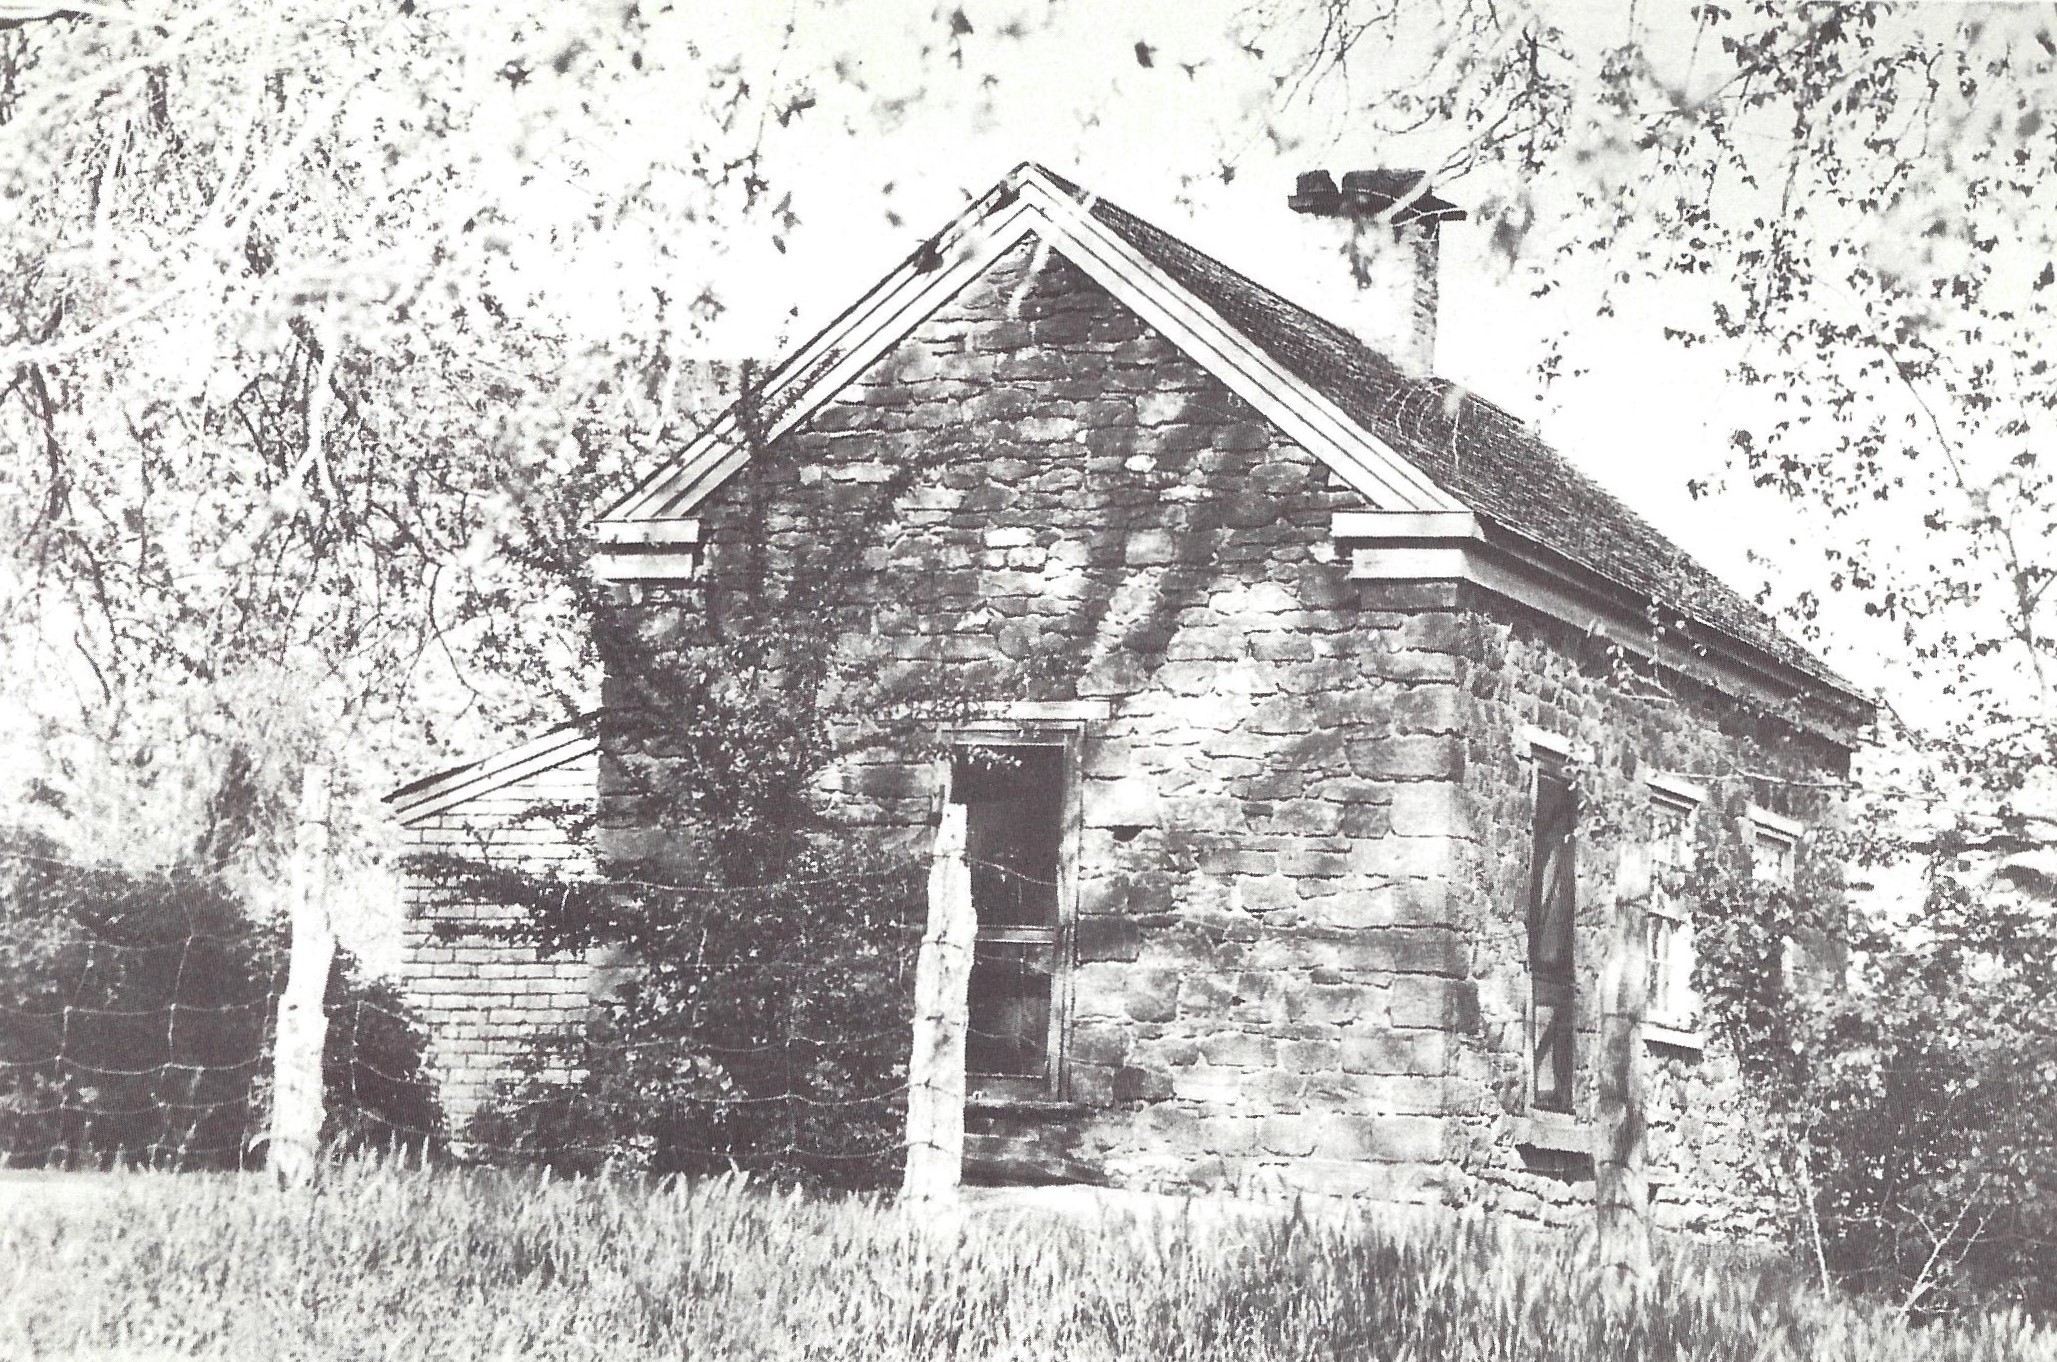 The original George Brooks Sr. home in St. George